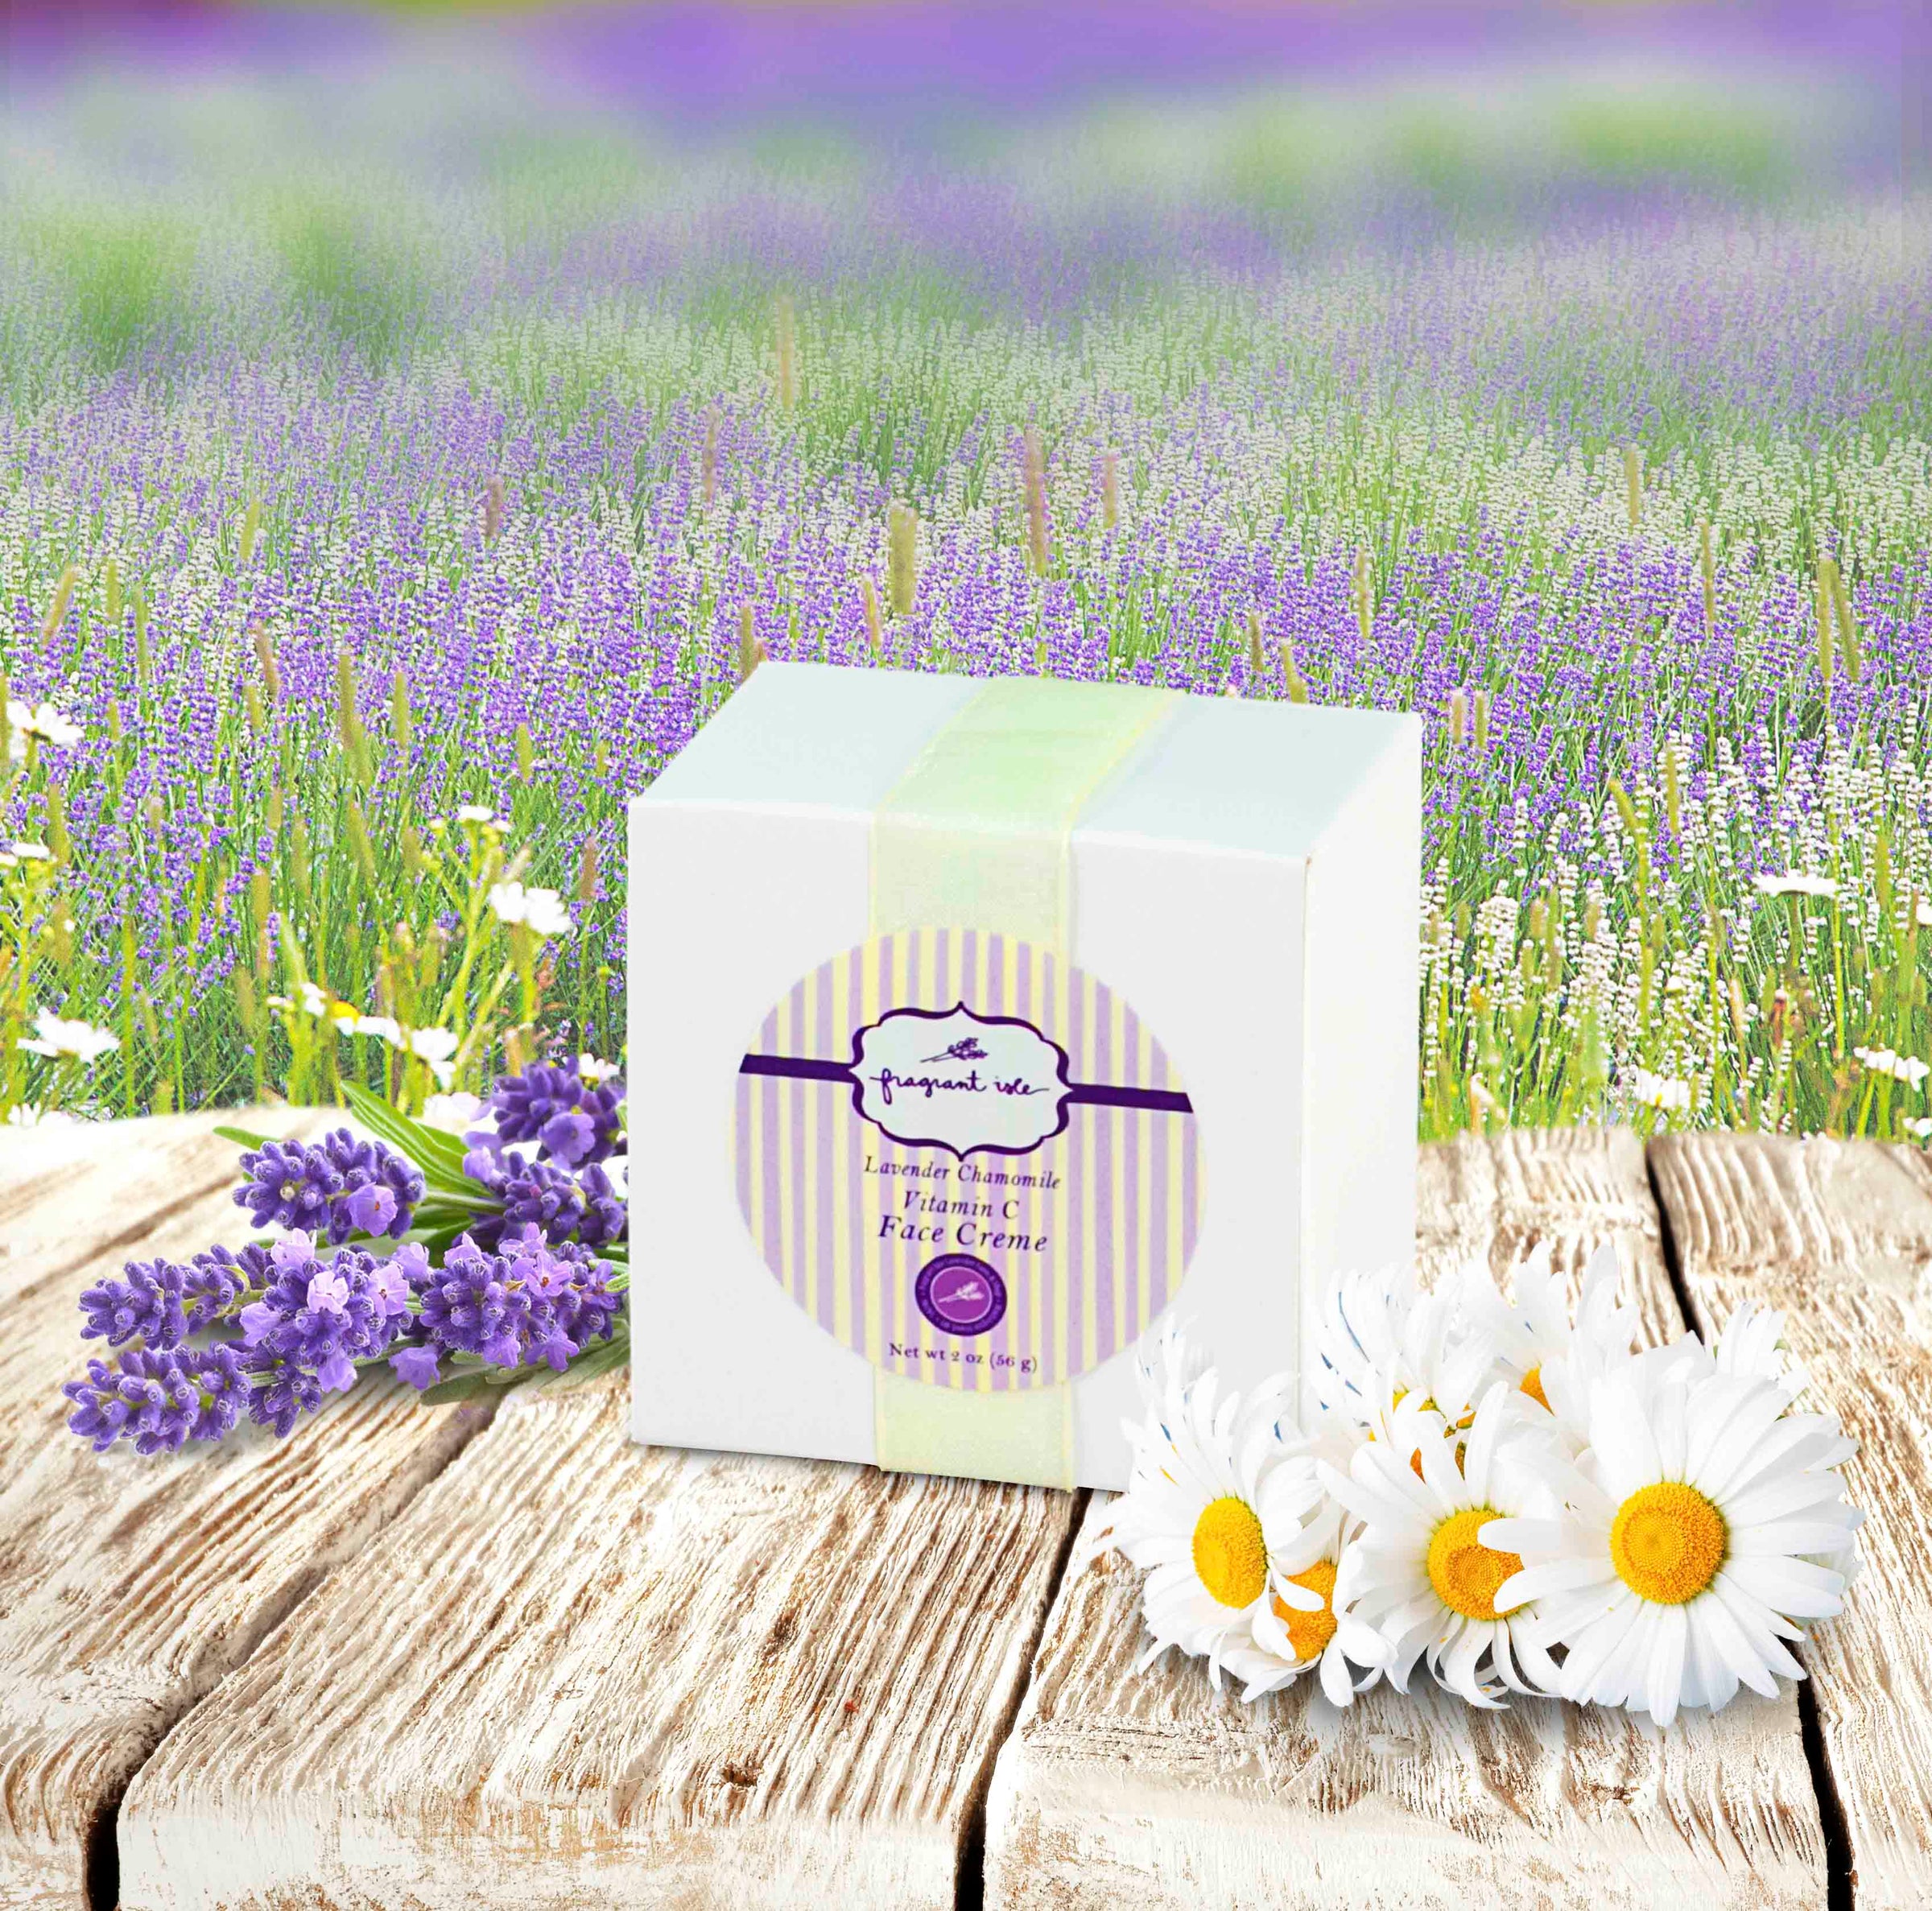 Lavender Chamomile Massage Oil - 4 oz – Fragrant Isle Lavender Farm & Shop